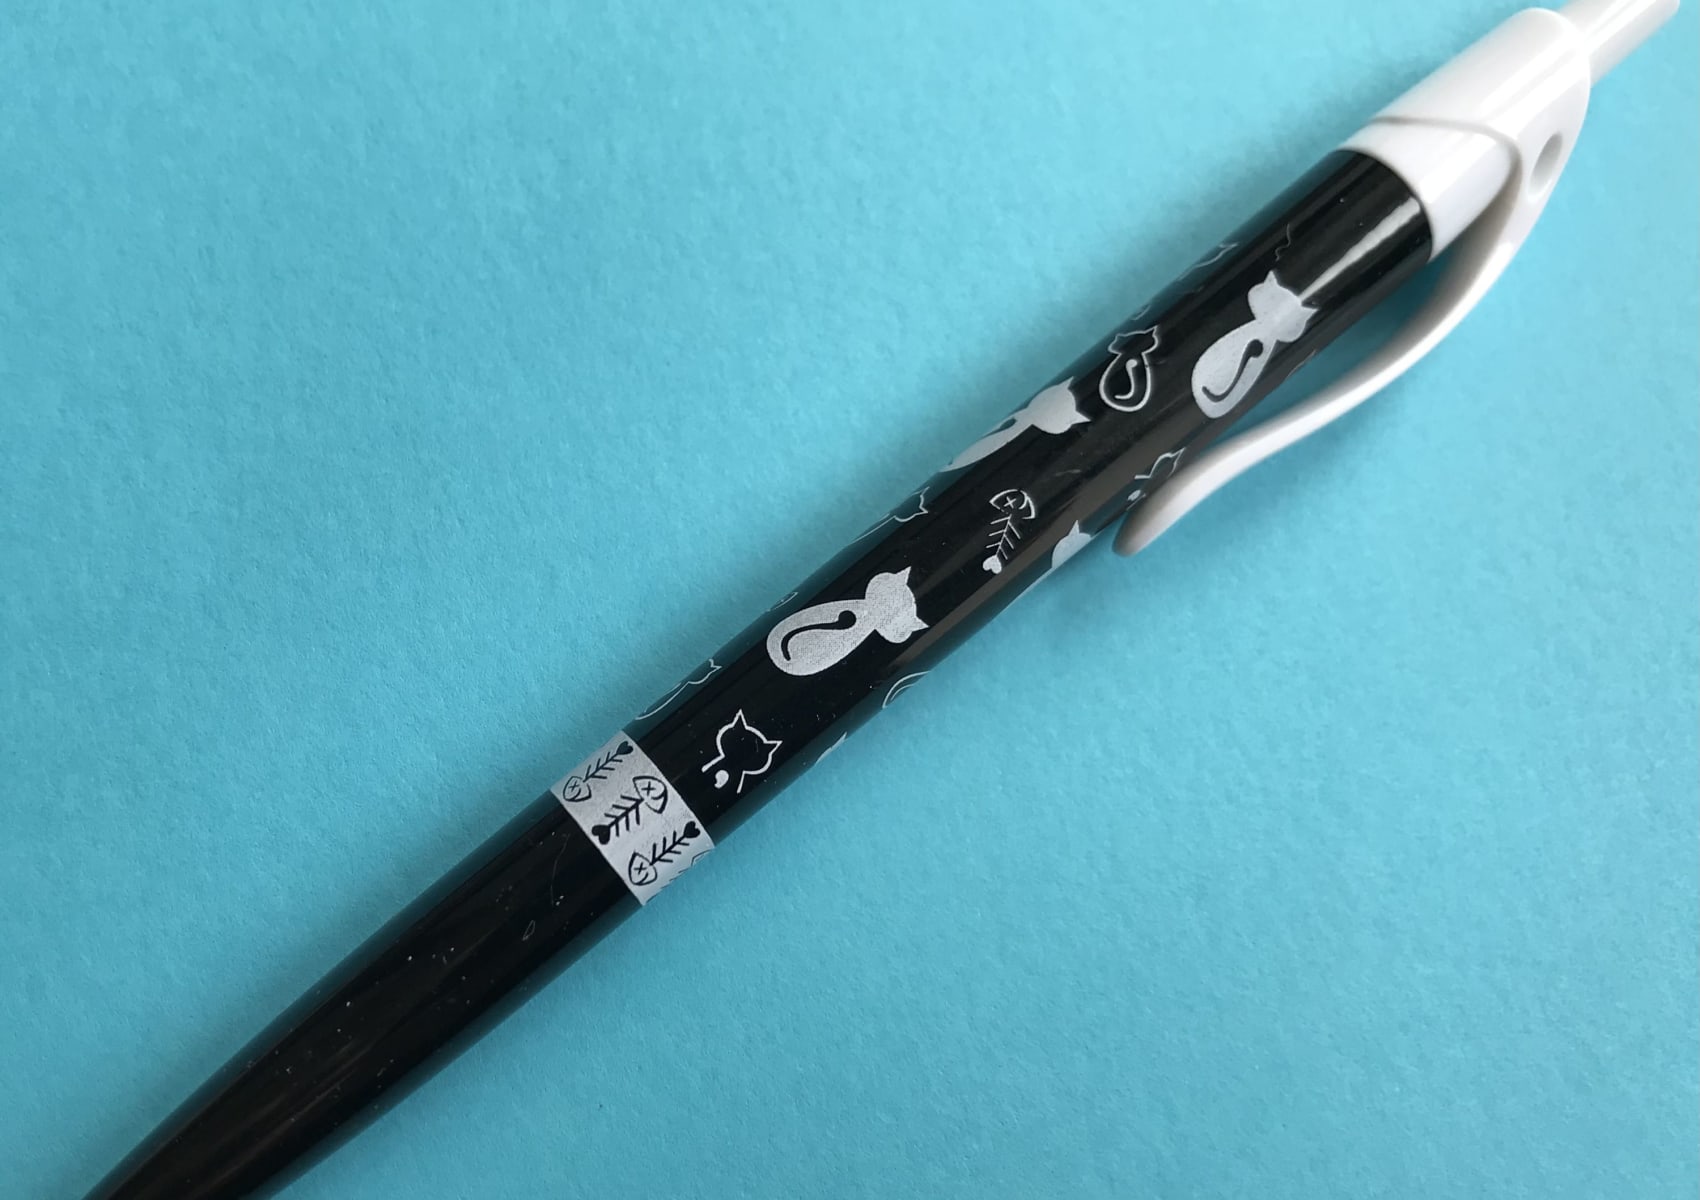 Black pen with cat designs